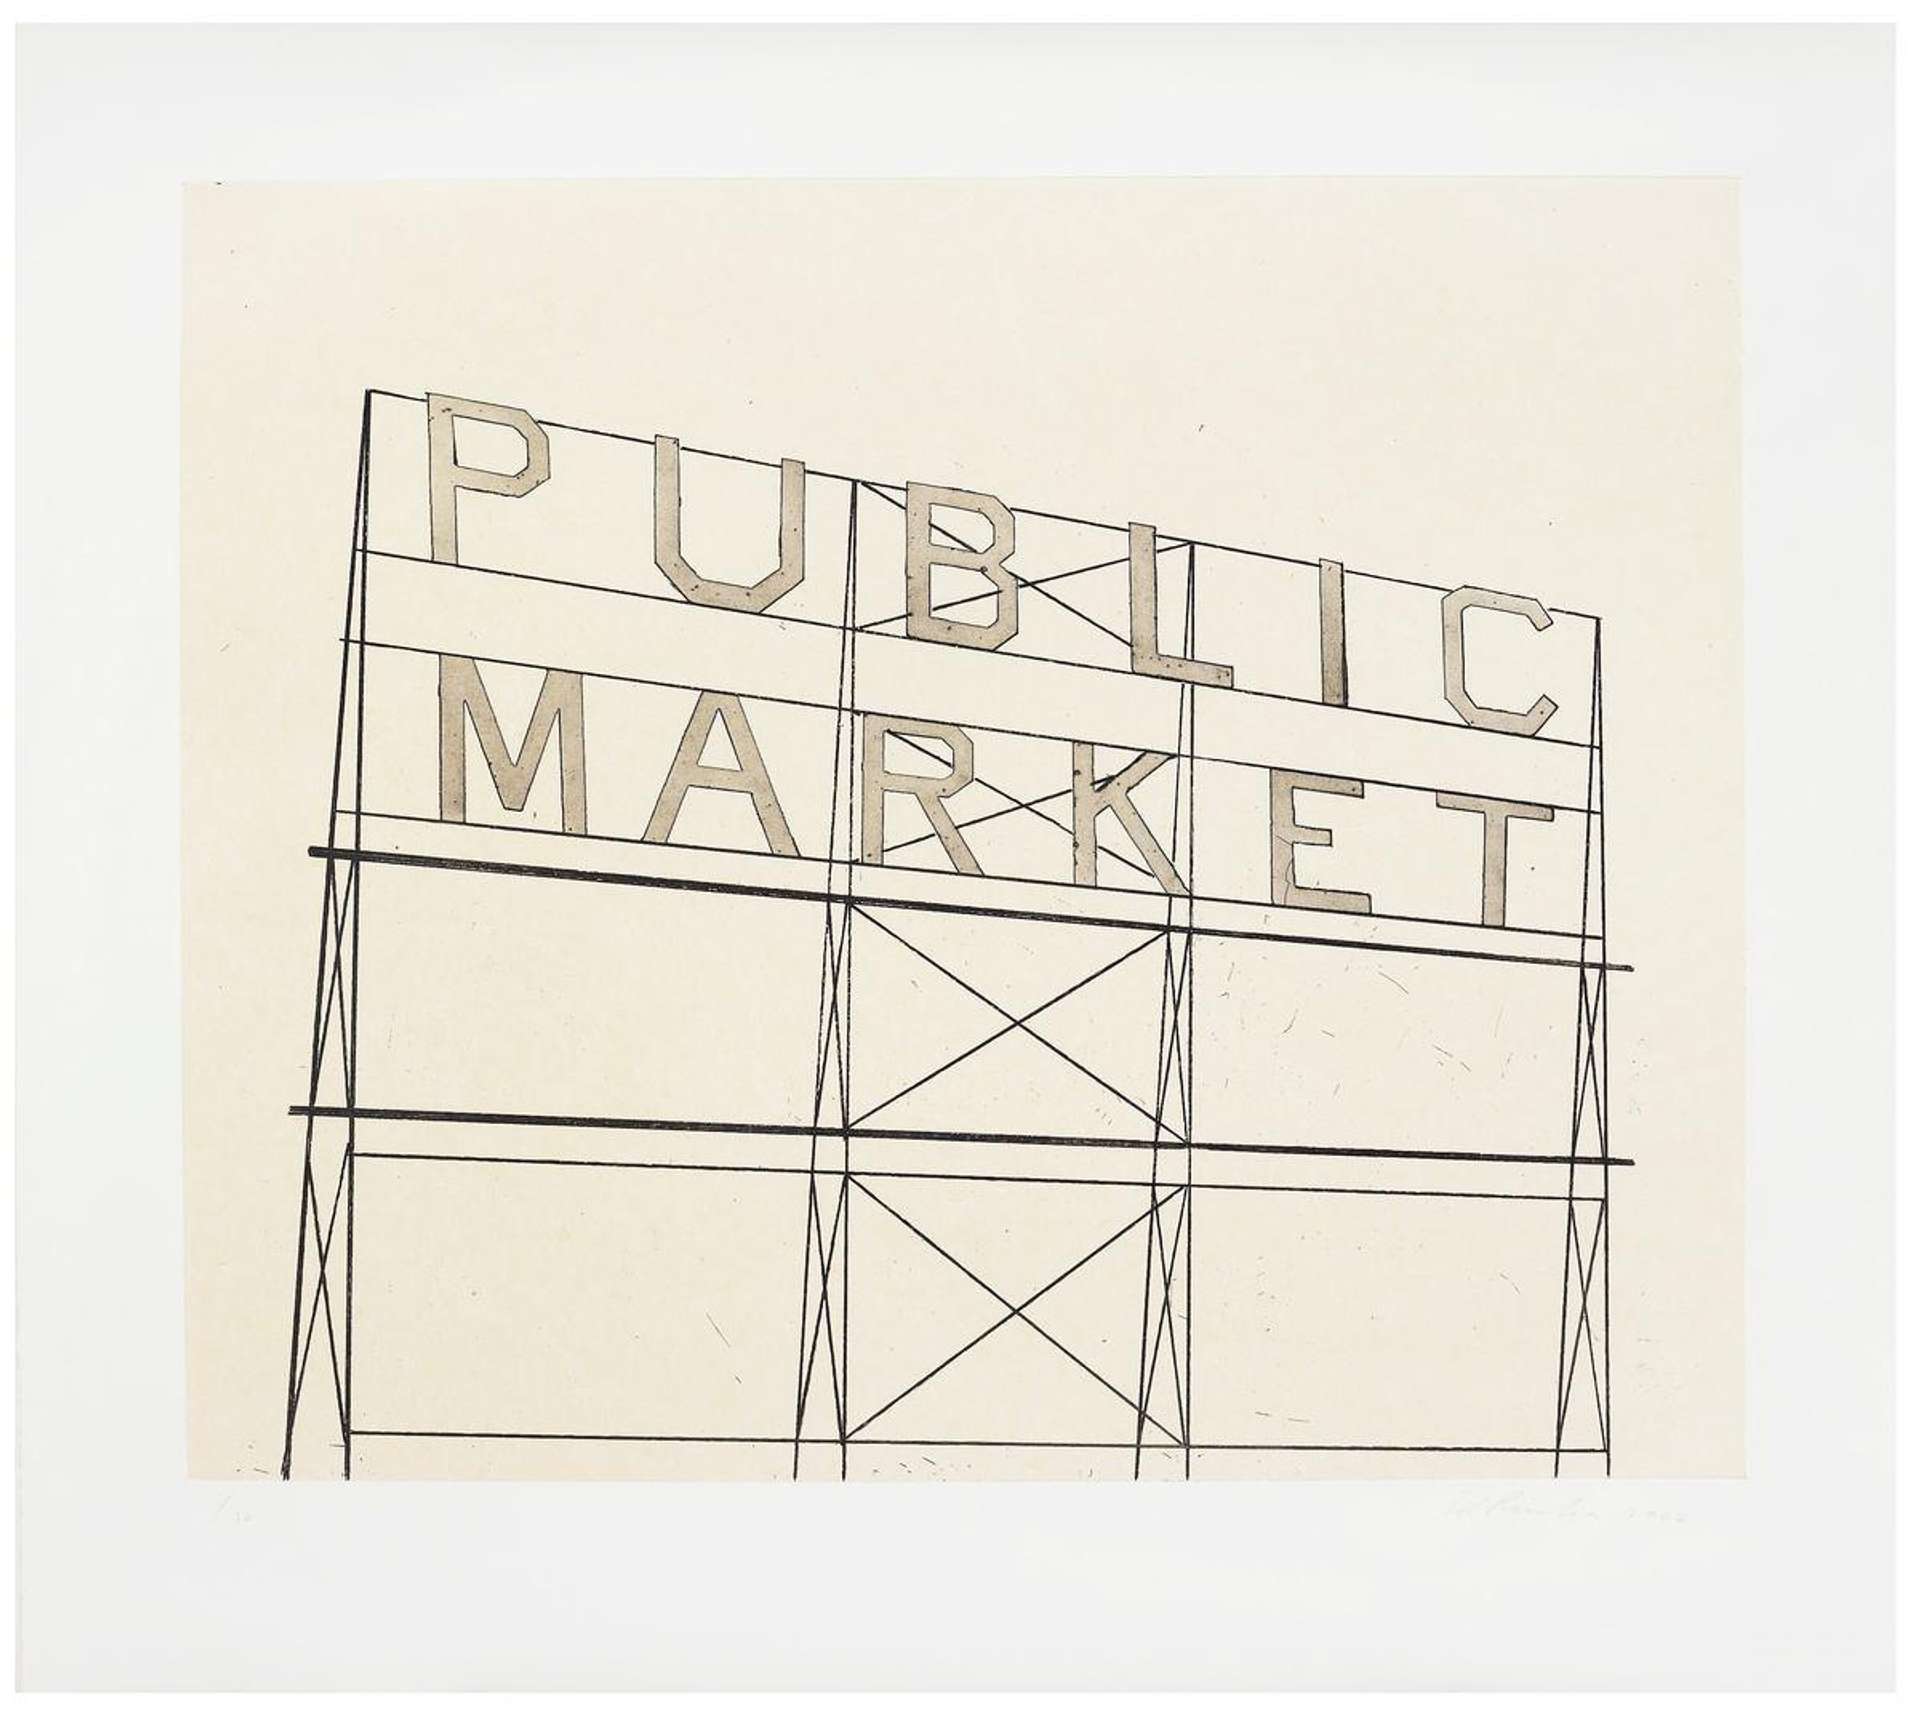 Ed Ruscha: Public Market - Signed Print